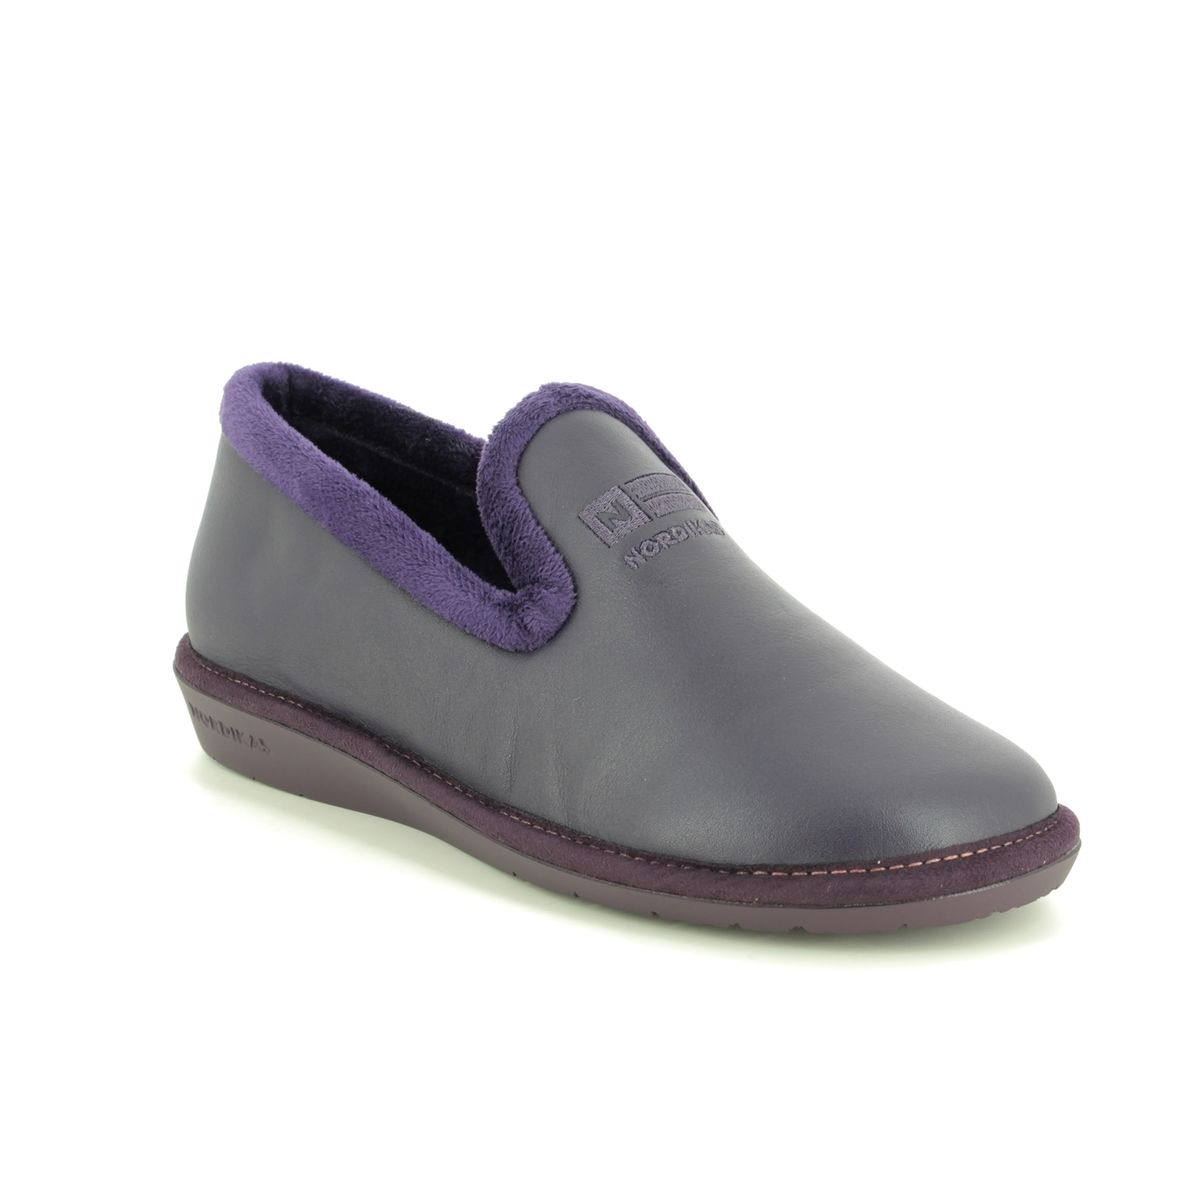 Nordikas Tabackin 95 Purple Leather Womens Slippers 305-4   Nicola 3 In Size 42 In Plain Purple Leather